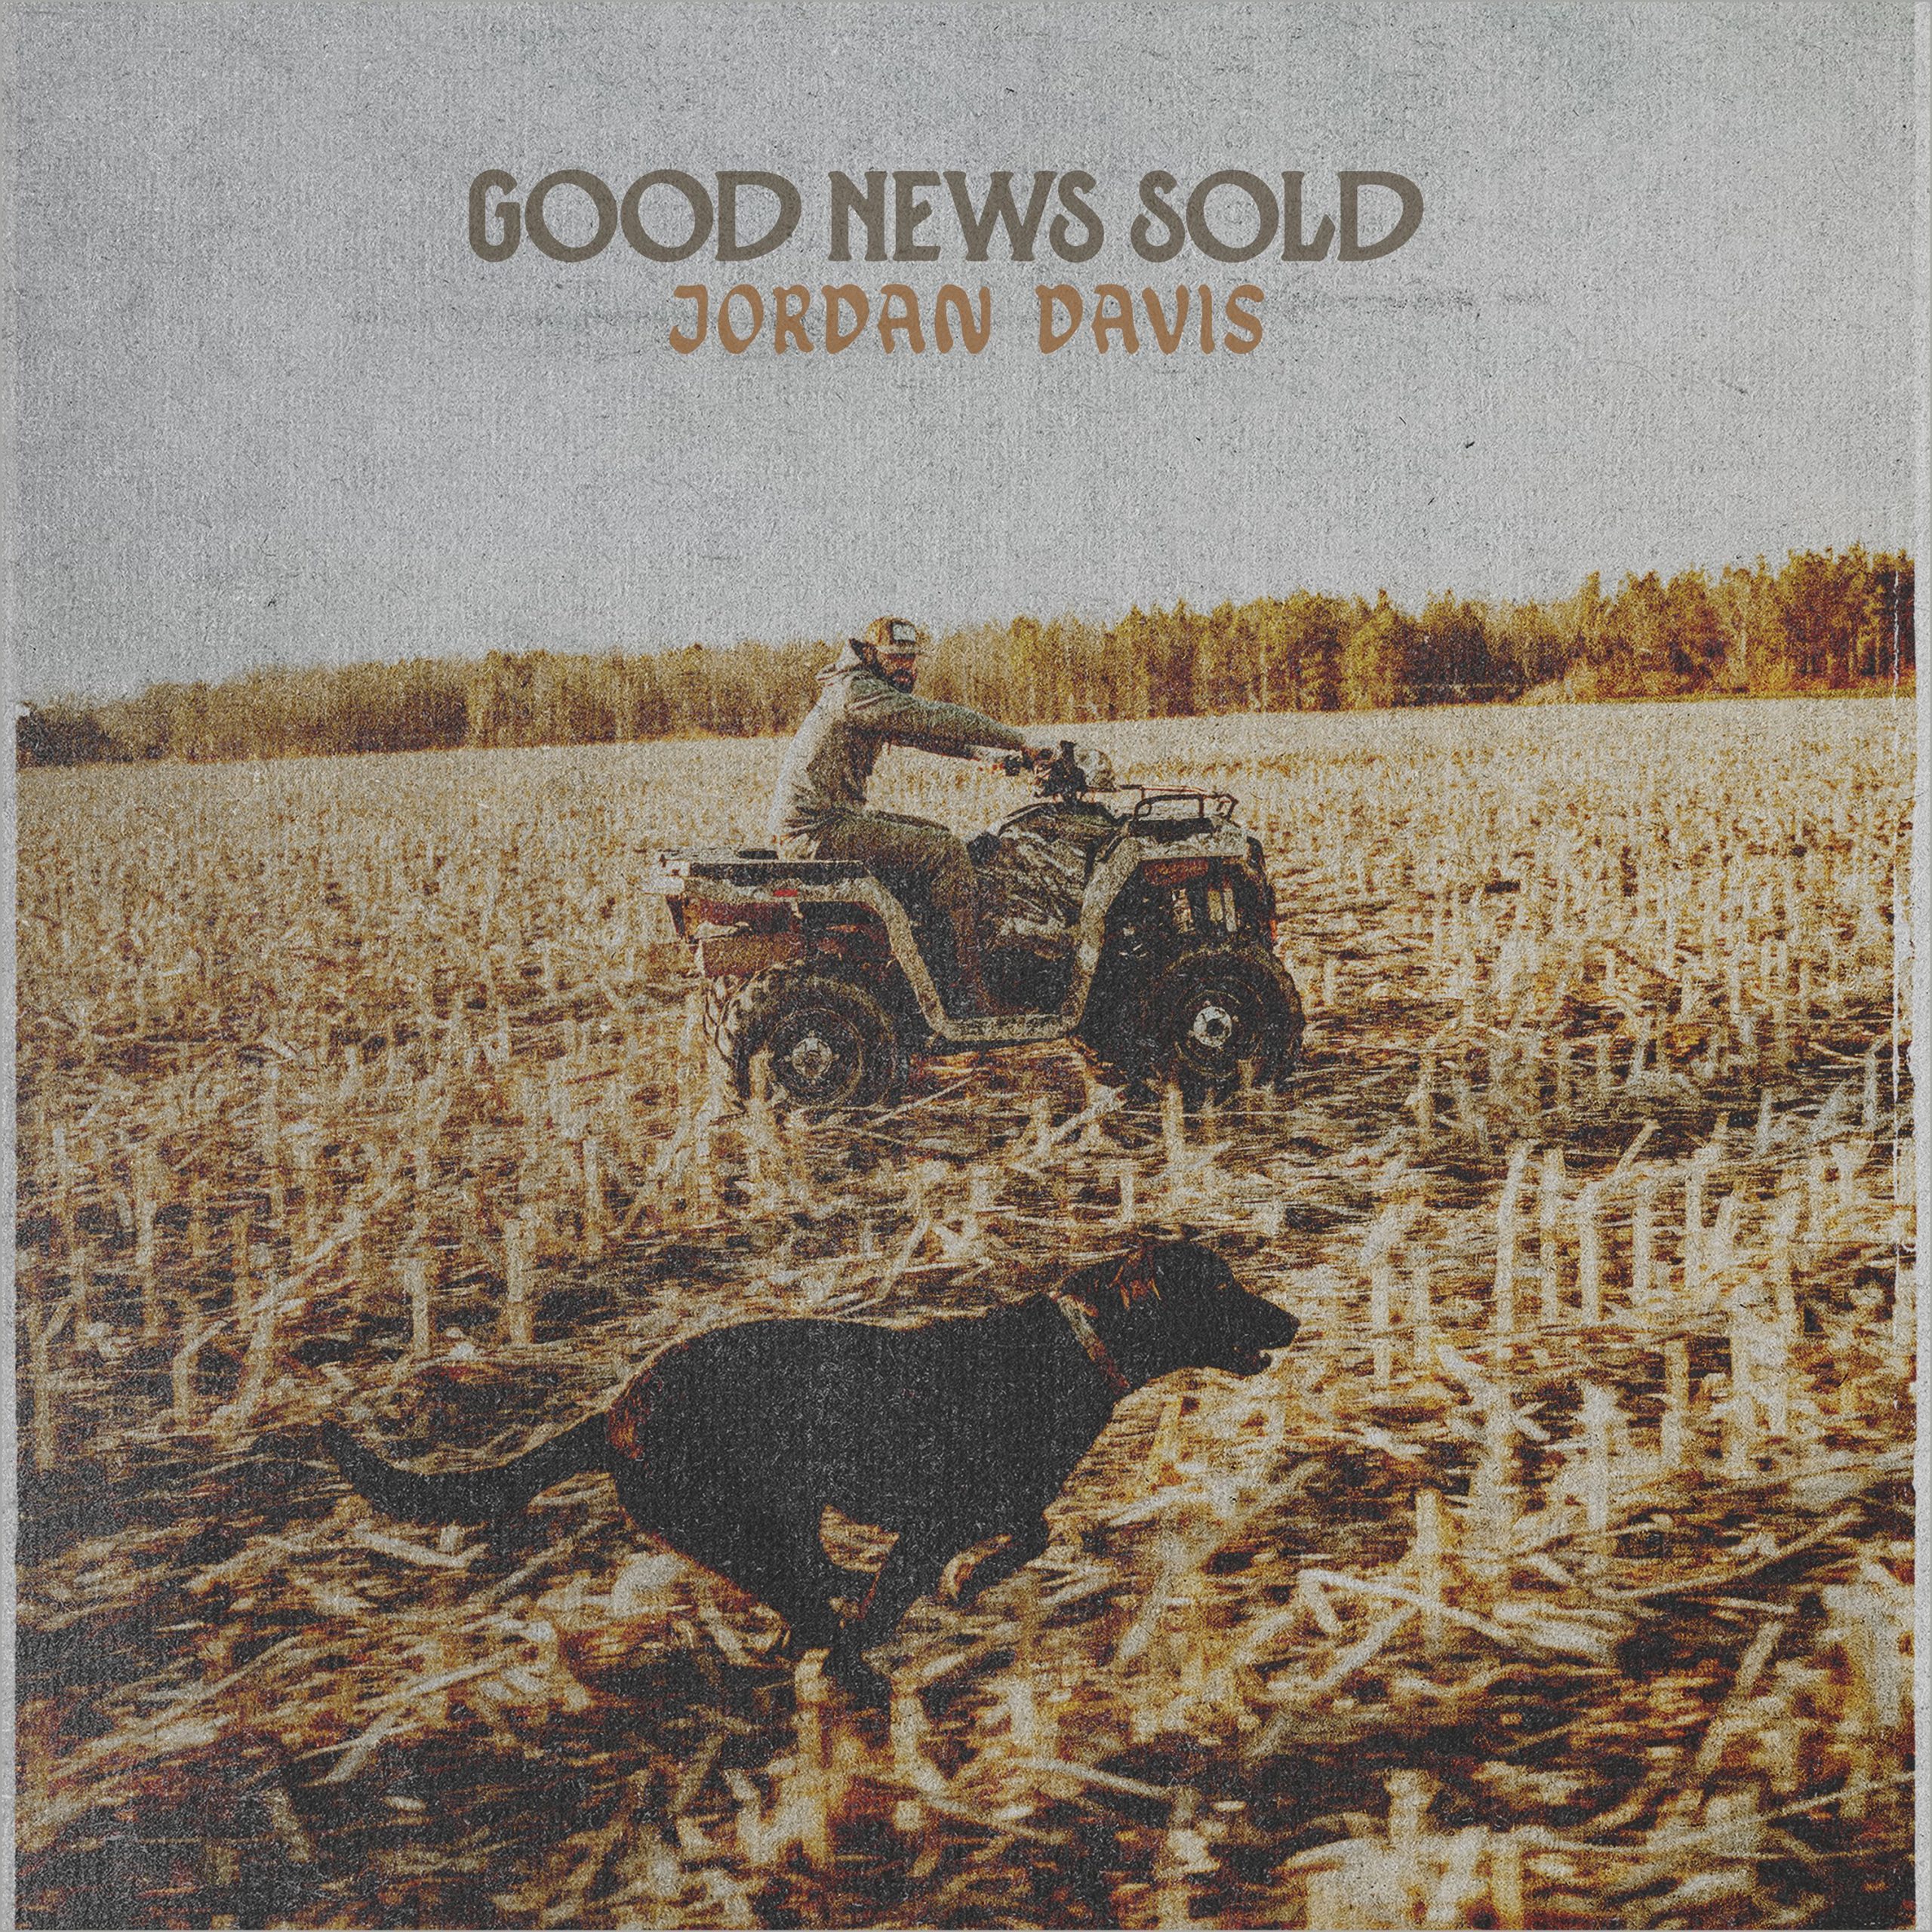 Jordan Davis "Good News Sold" cover art